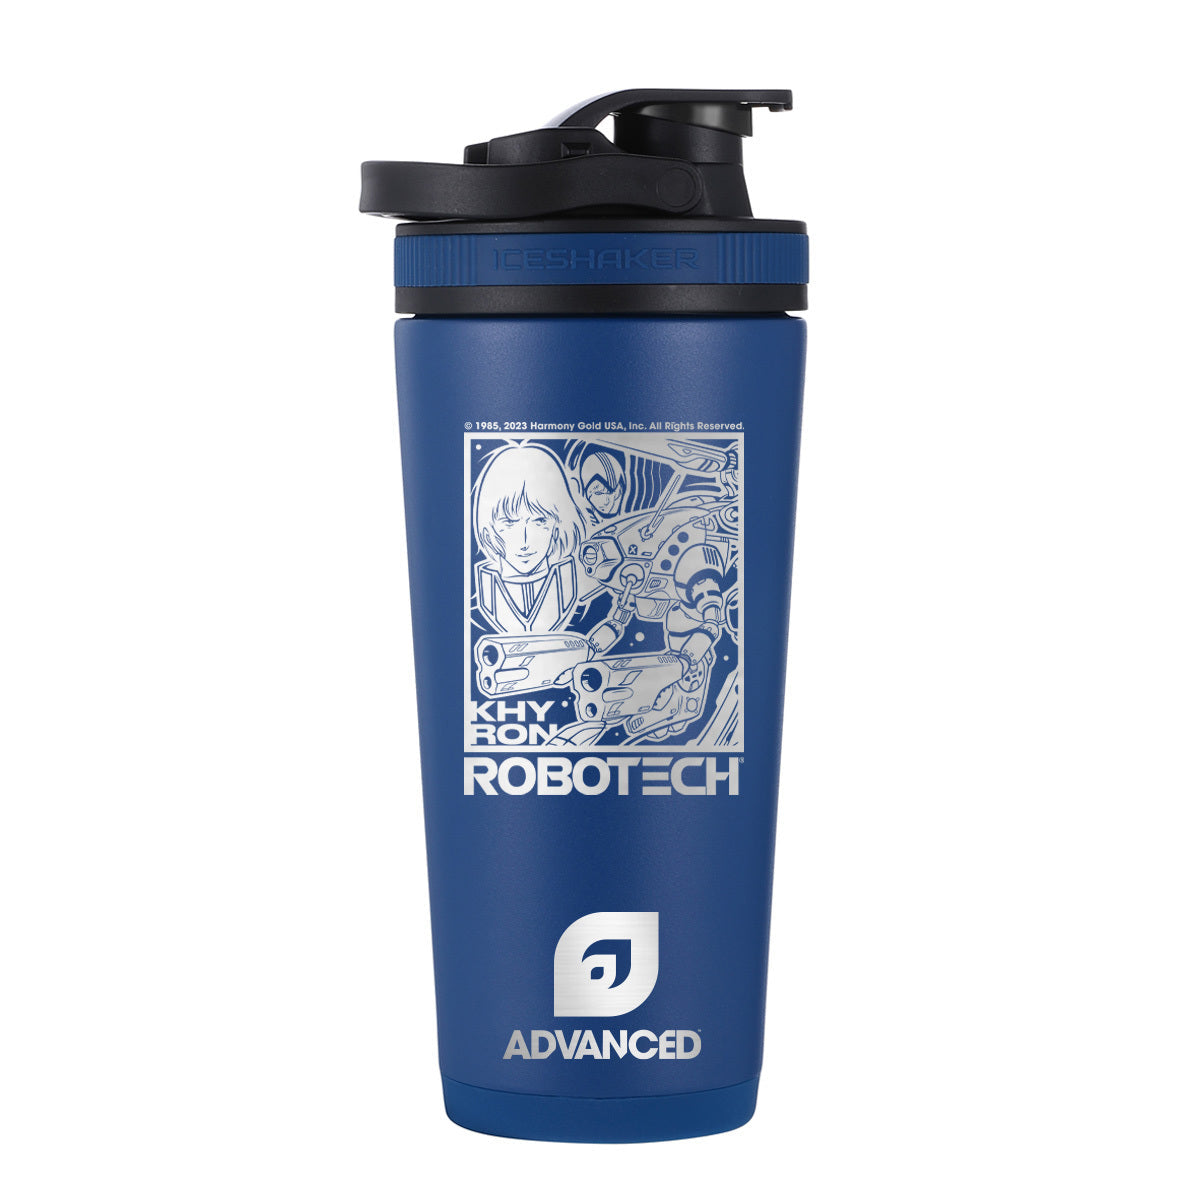 Robotech x ADVANCED Khyron Ice Shaker